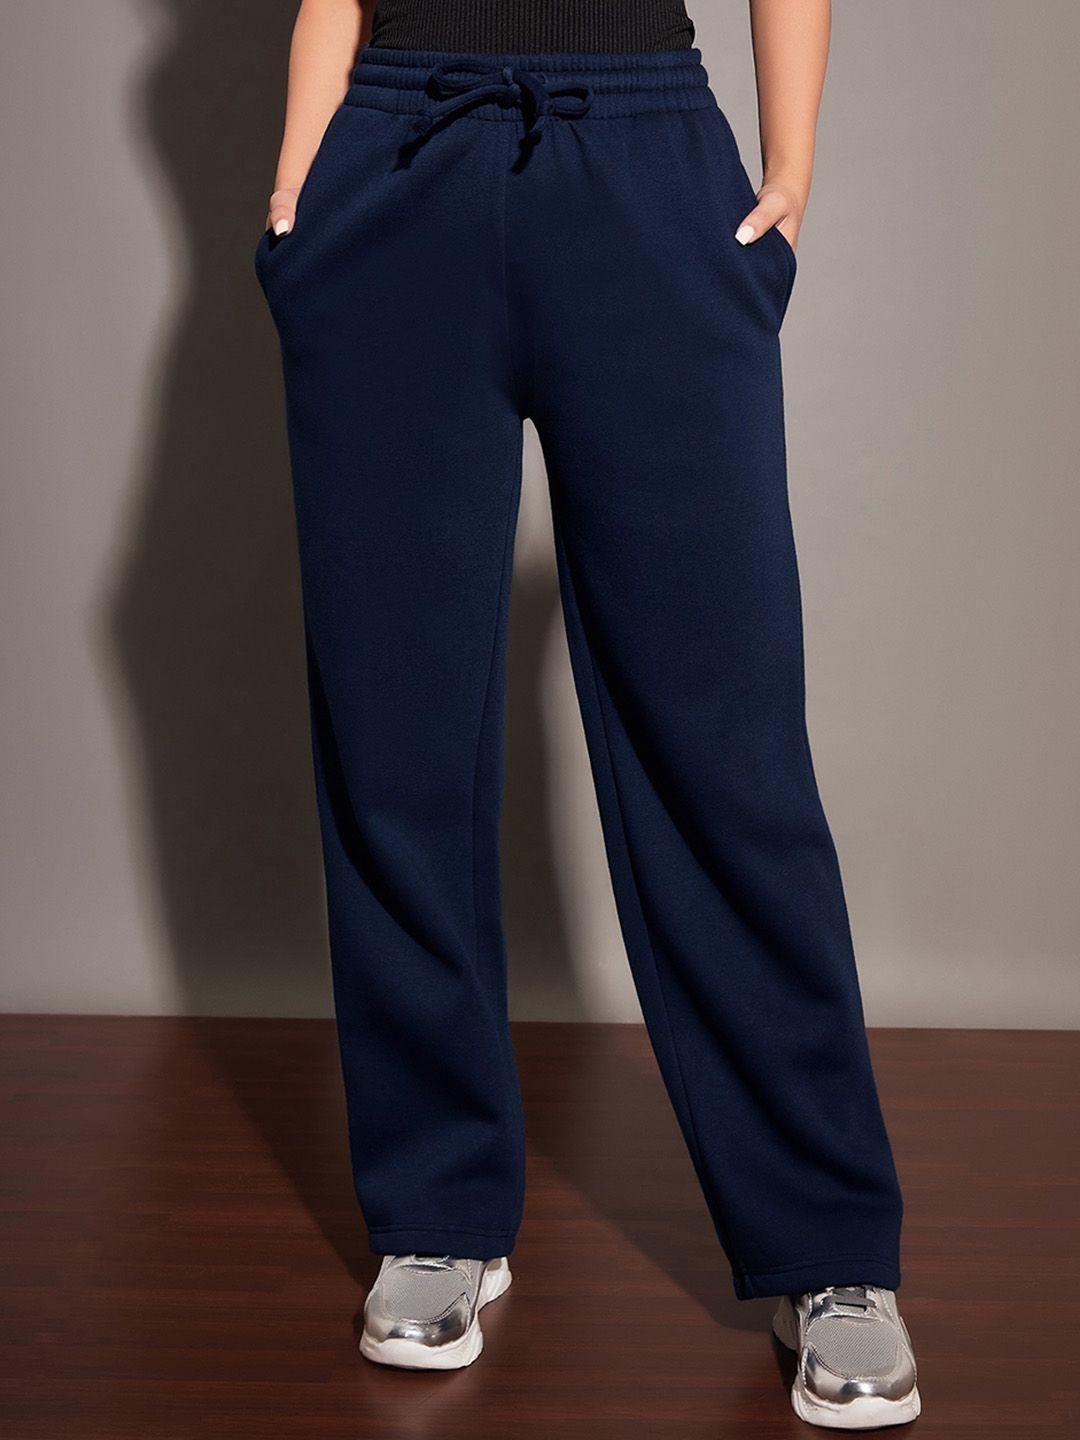 SASSAFRAS Women Navy Blue Relaxed Fit Mid-Rise Fleece Track Pants